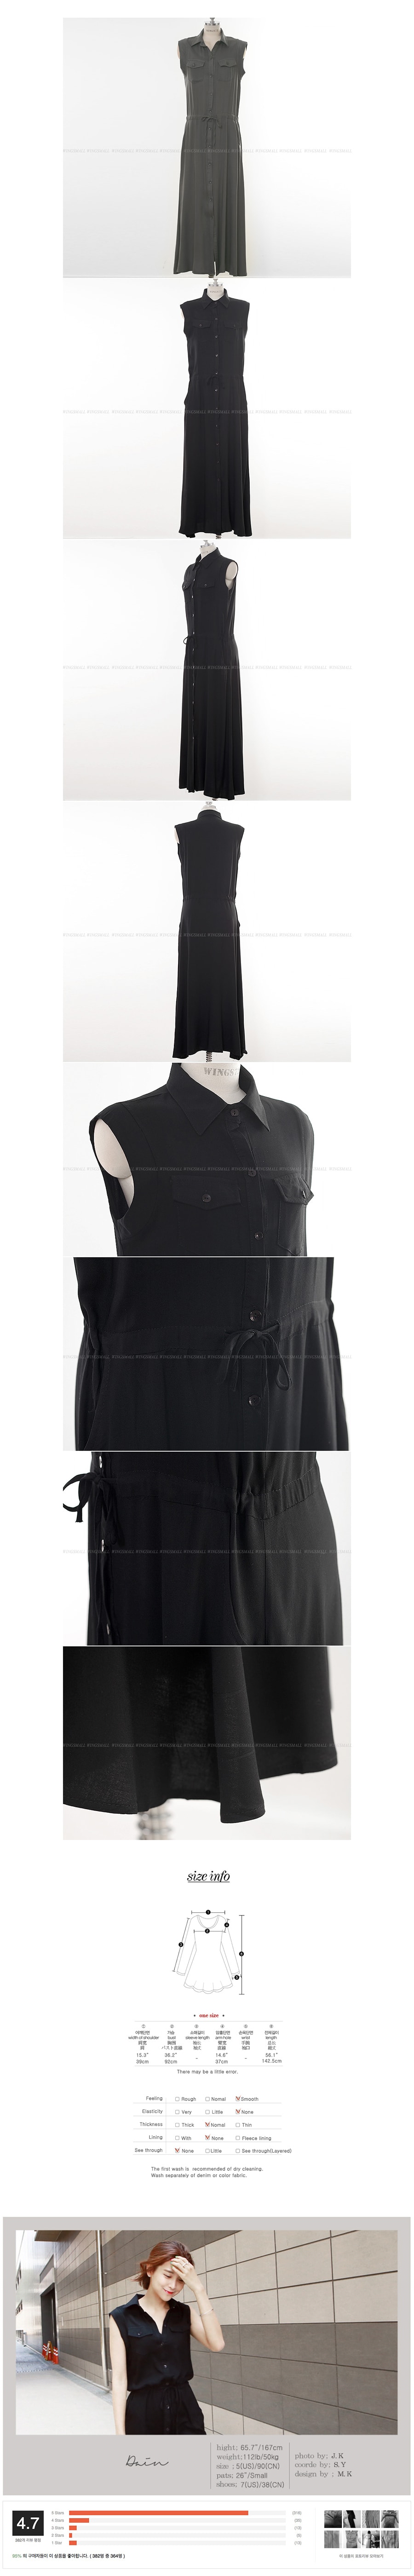 [Special Offer]  Spread collar Waist String Shirt Dress #KhakiGrey One Size(Free)